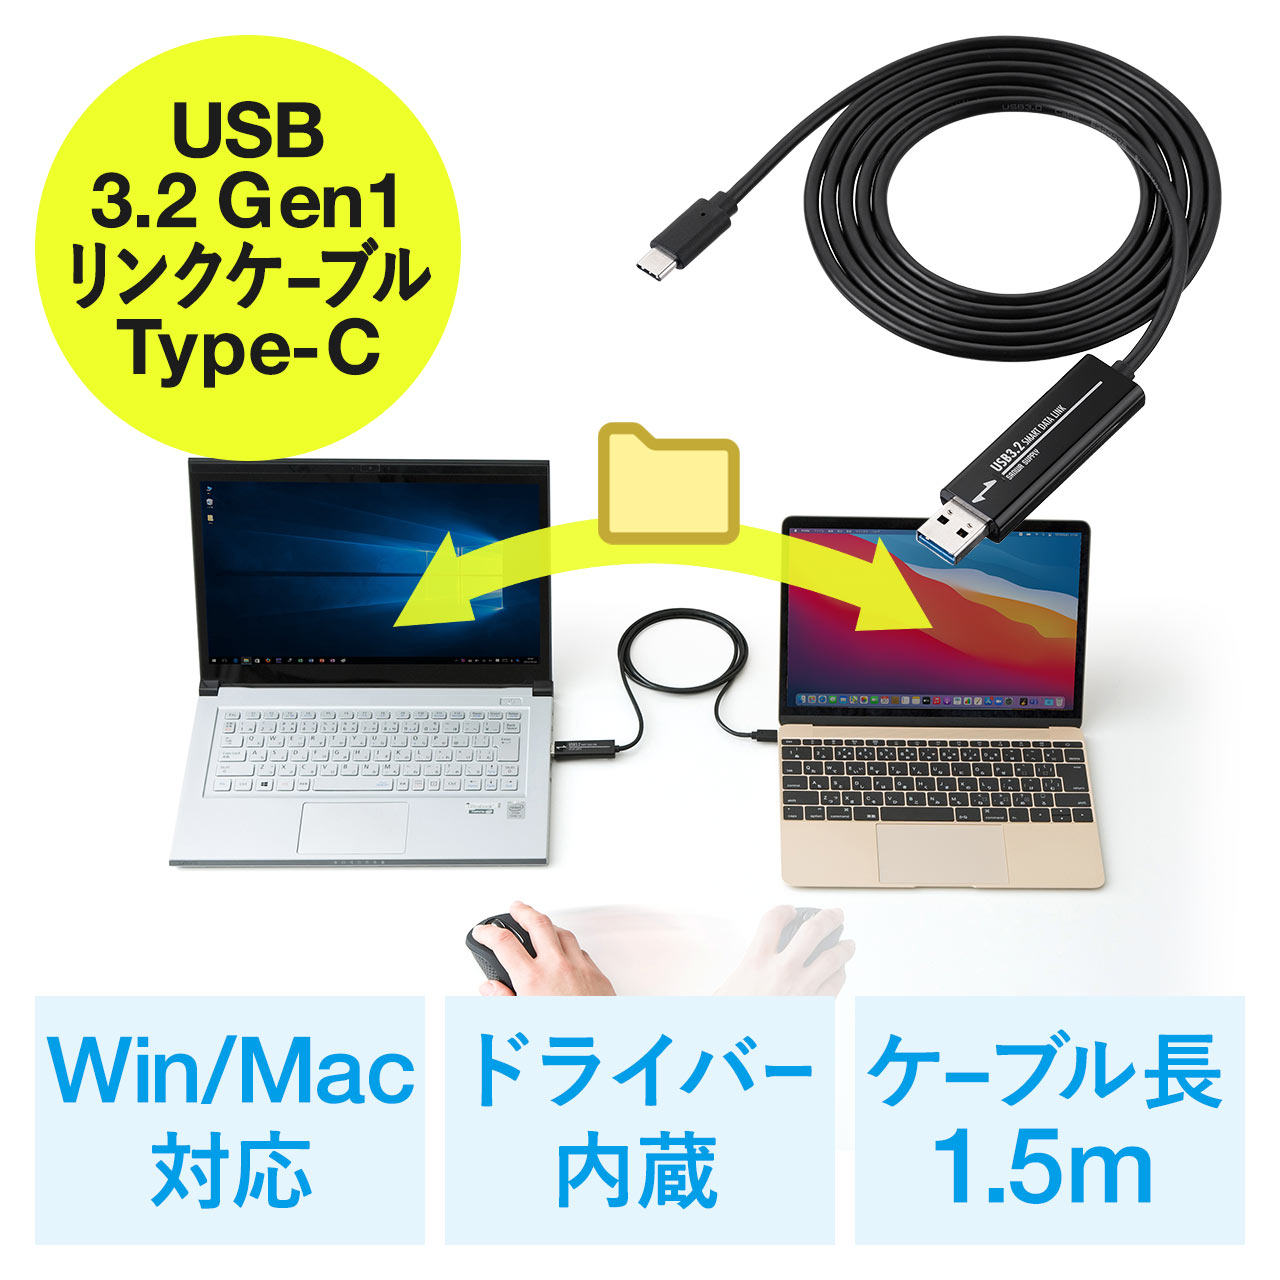 USBリンクケーブル USB3.2 Gen1 PC間 高速データ転送 データ移行 Windows/Mac両対応 Type-Cコネクタ 500-USB070